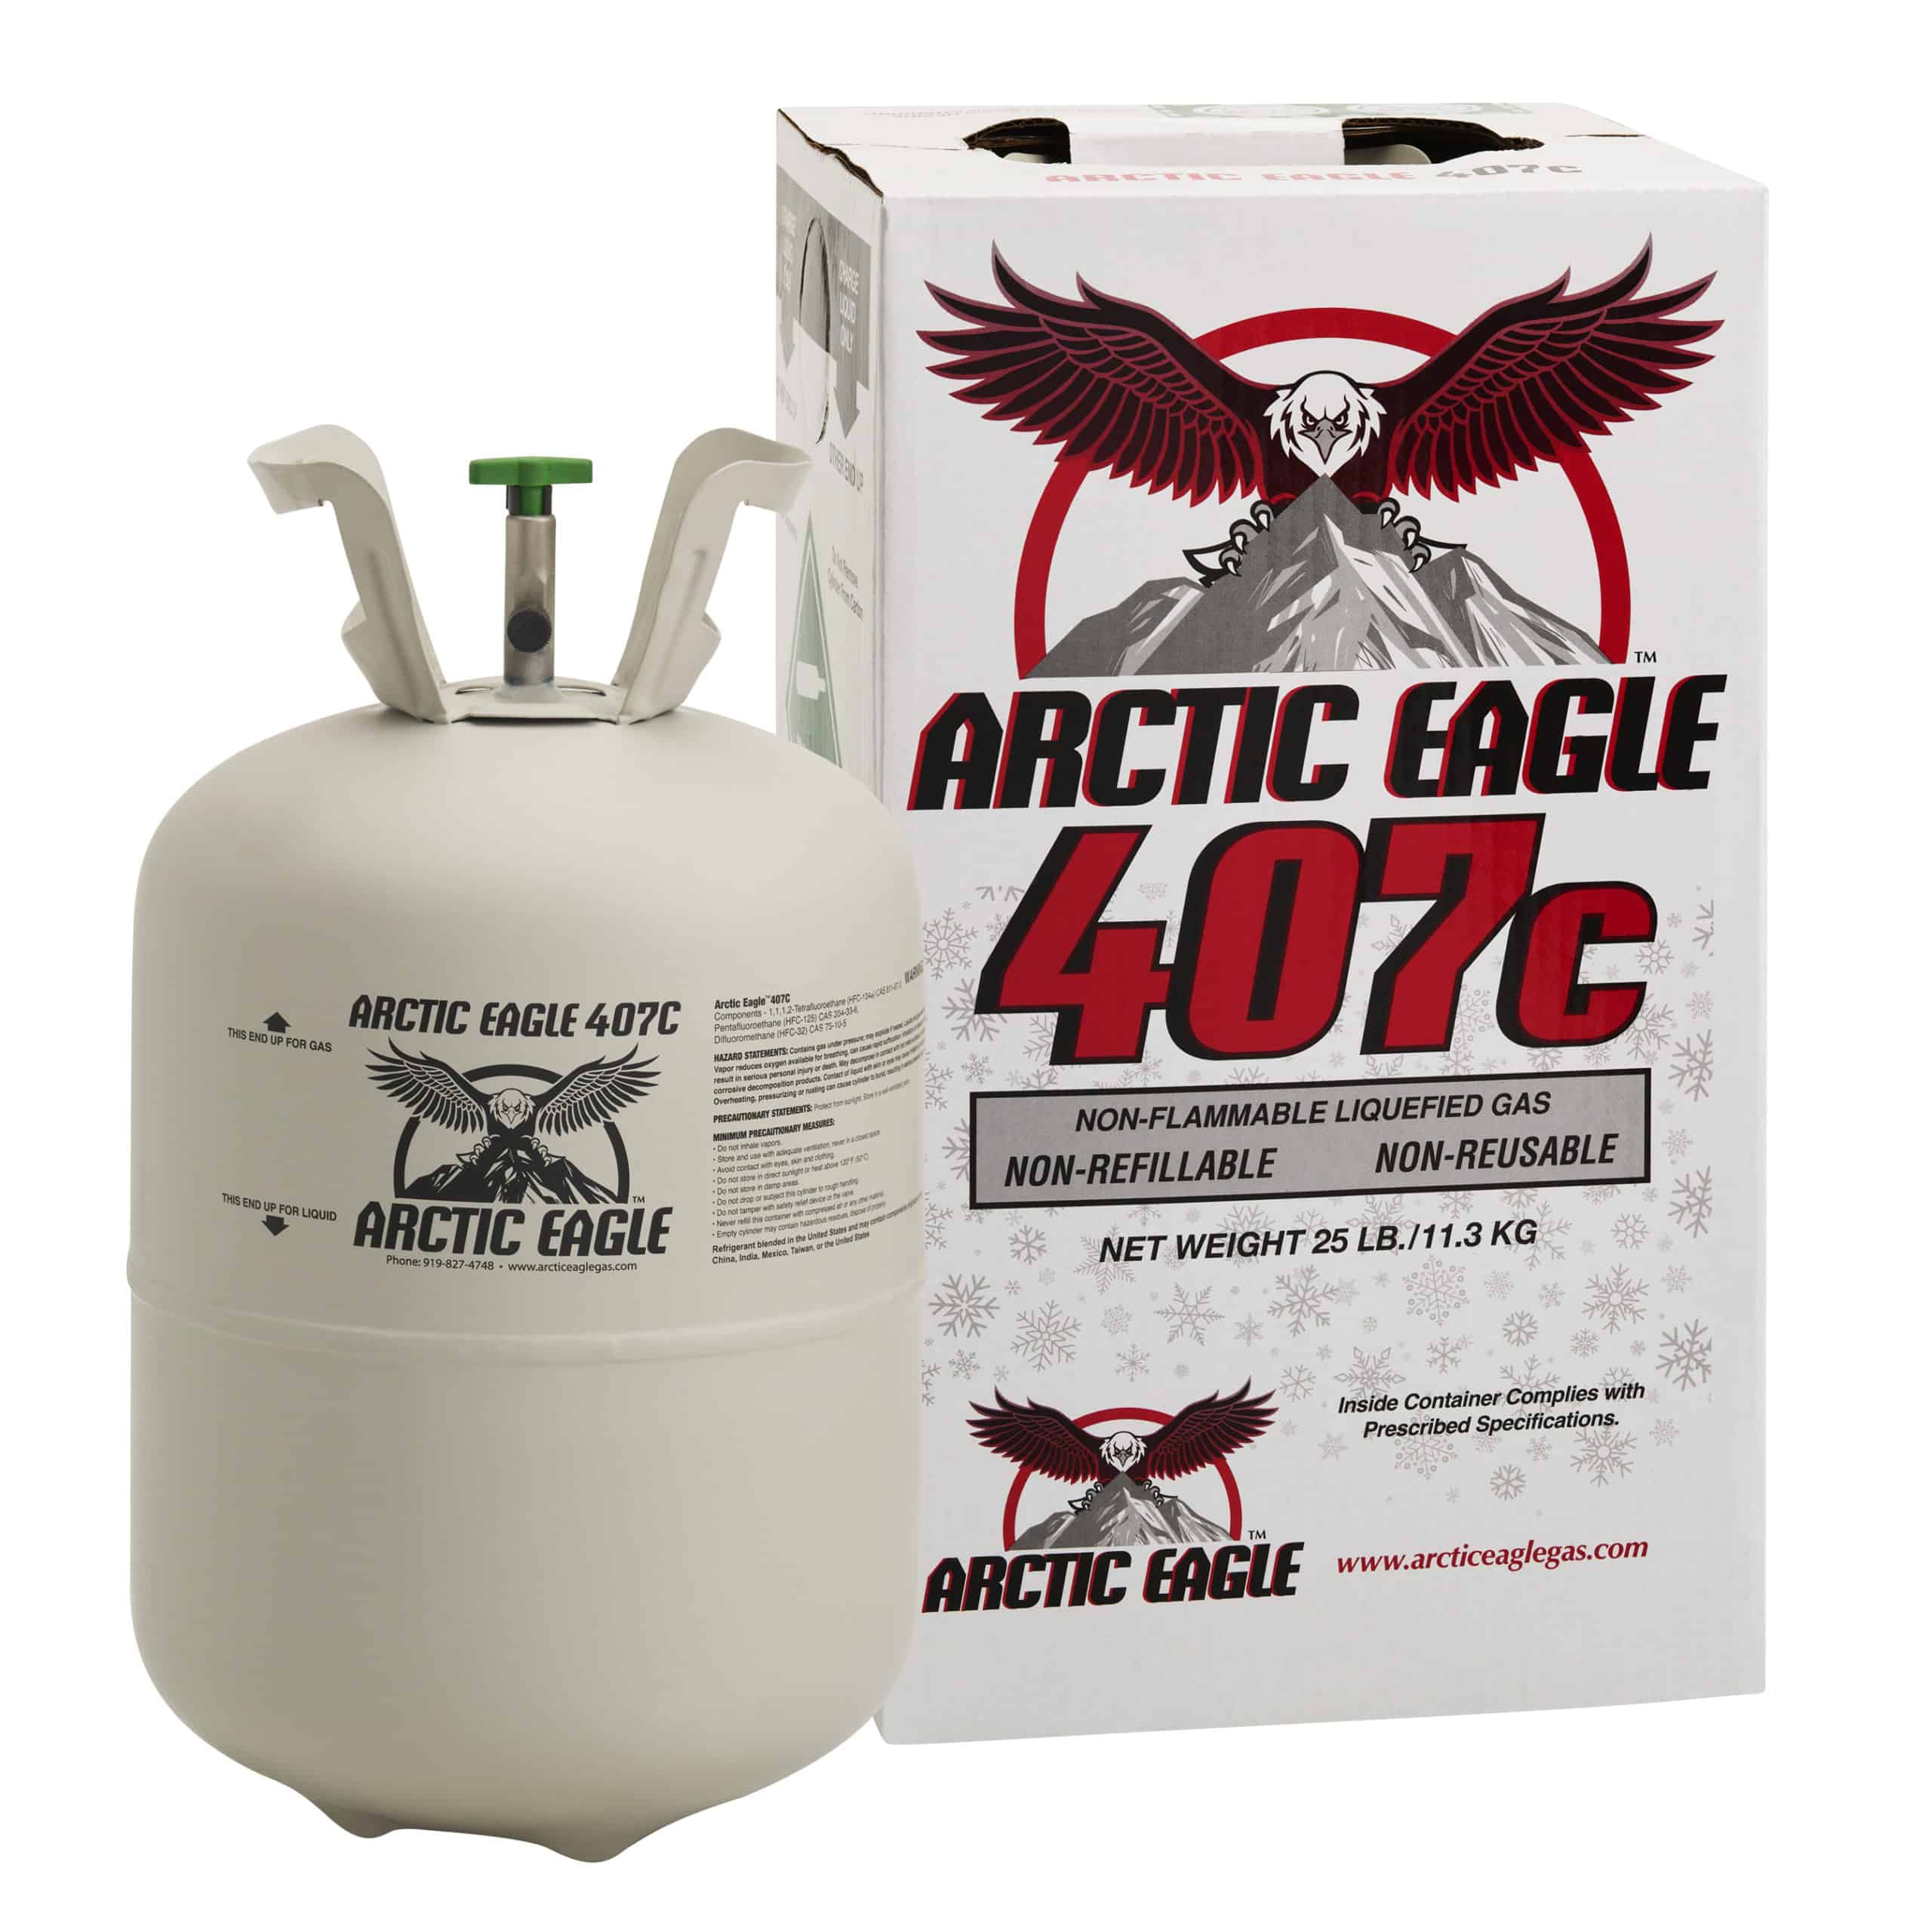 Artic_Eagle_407C_tank_box